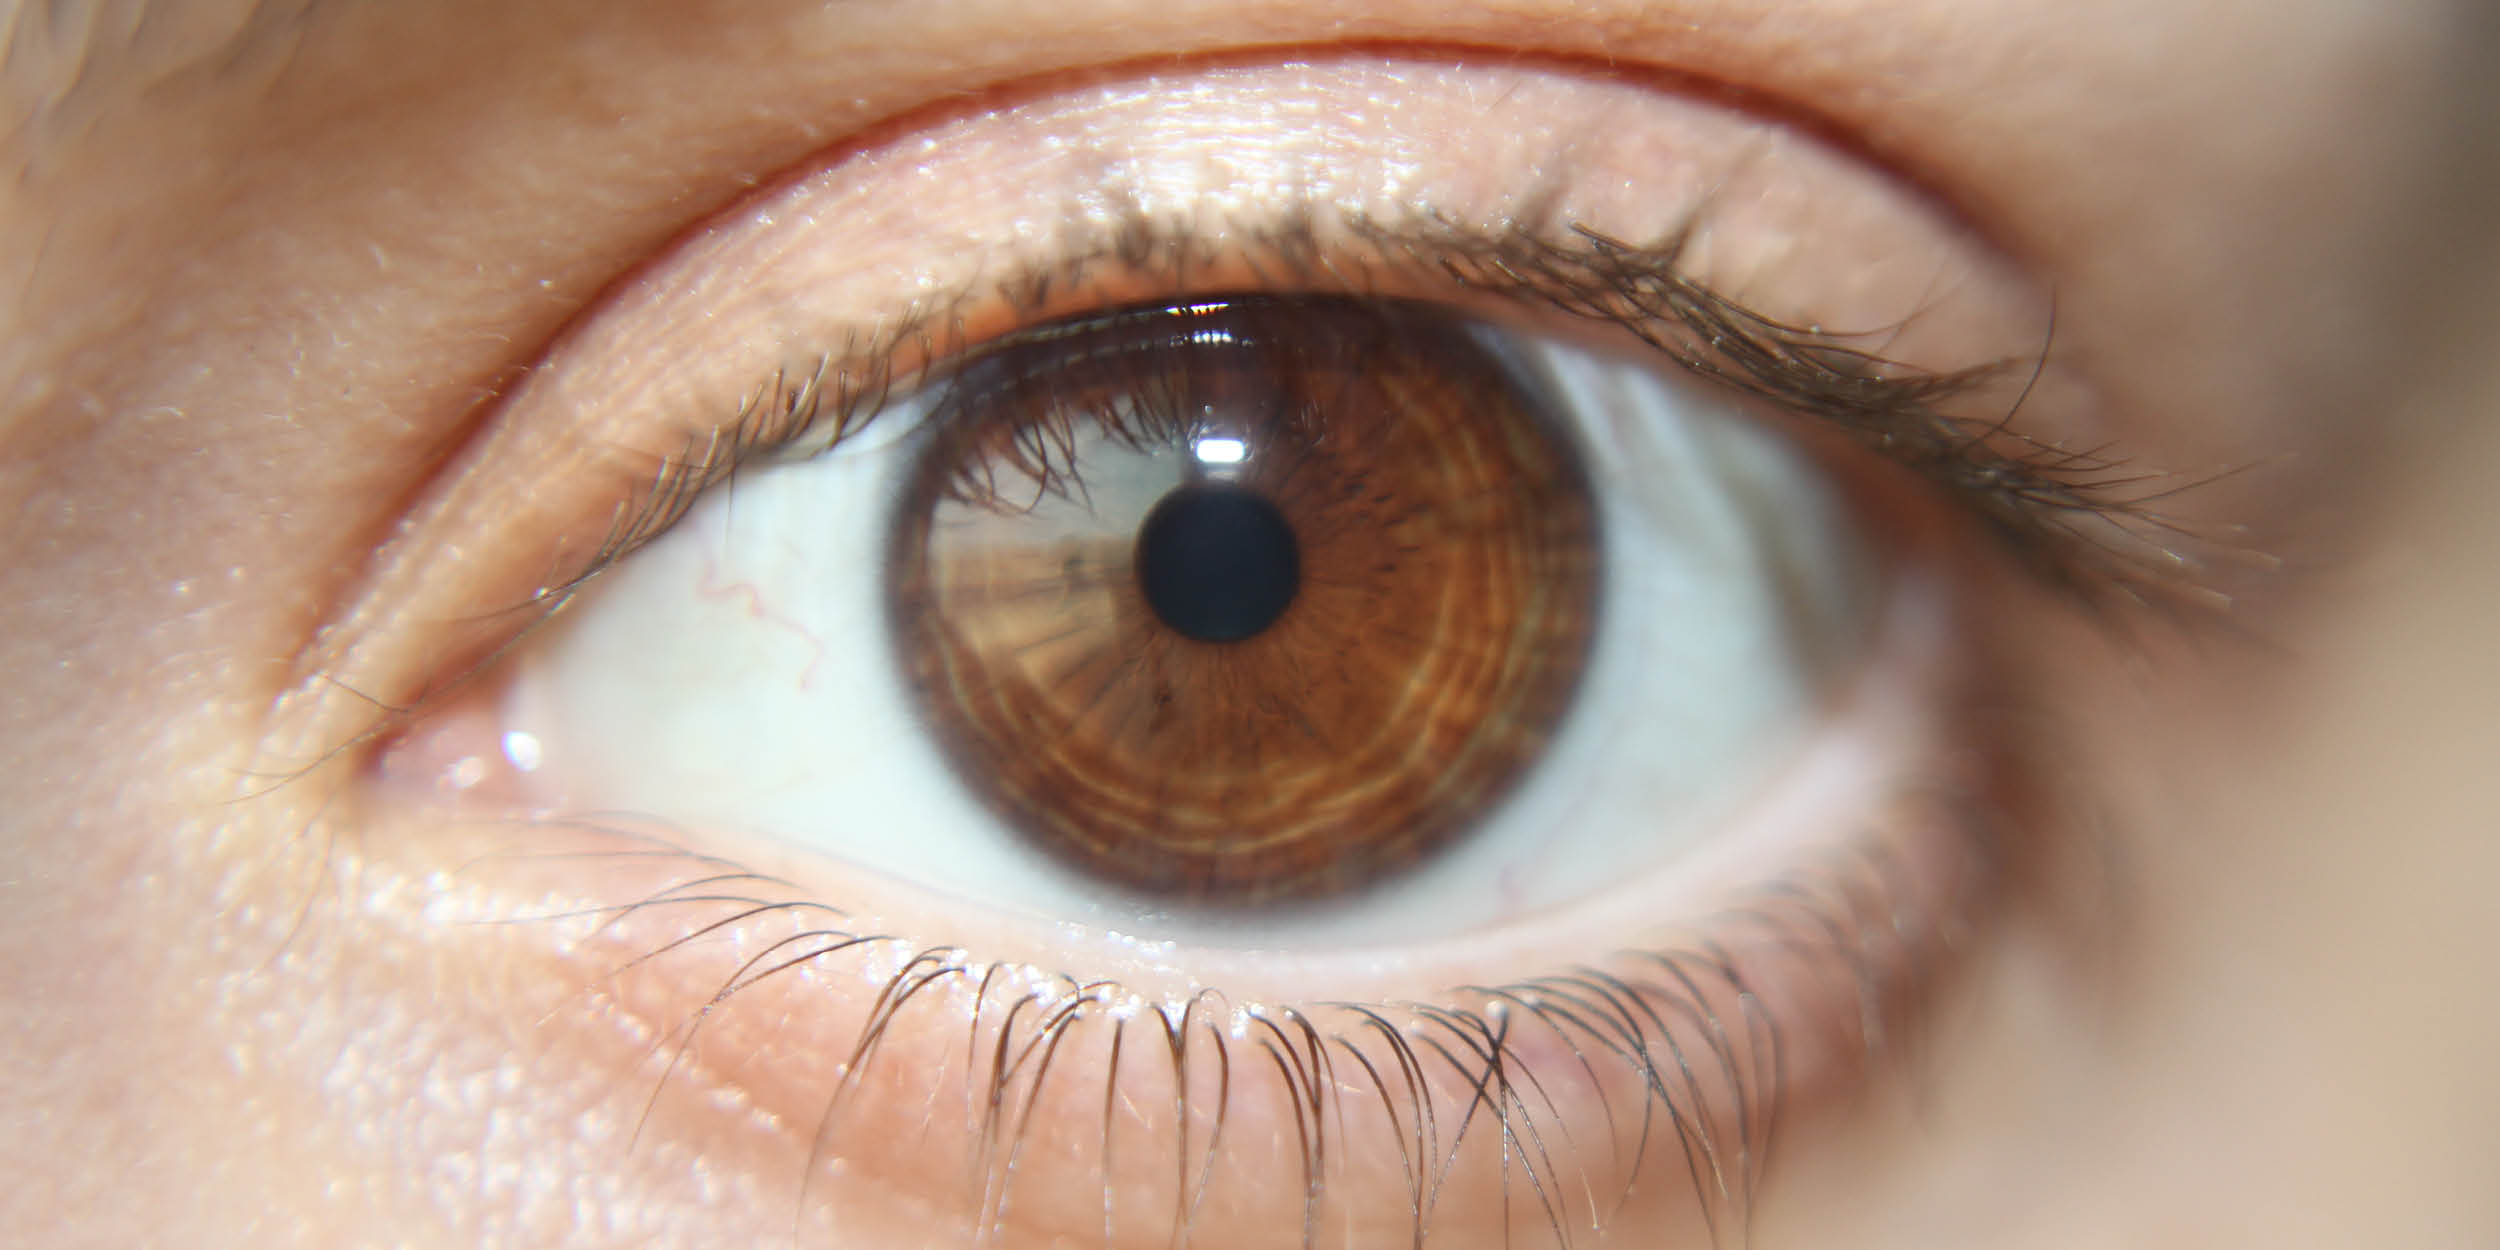 Макросъемка глаза человека с катарактой